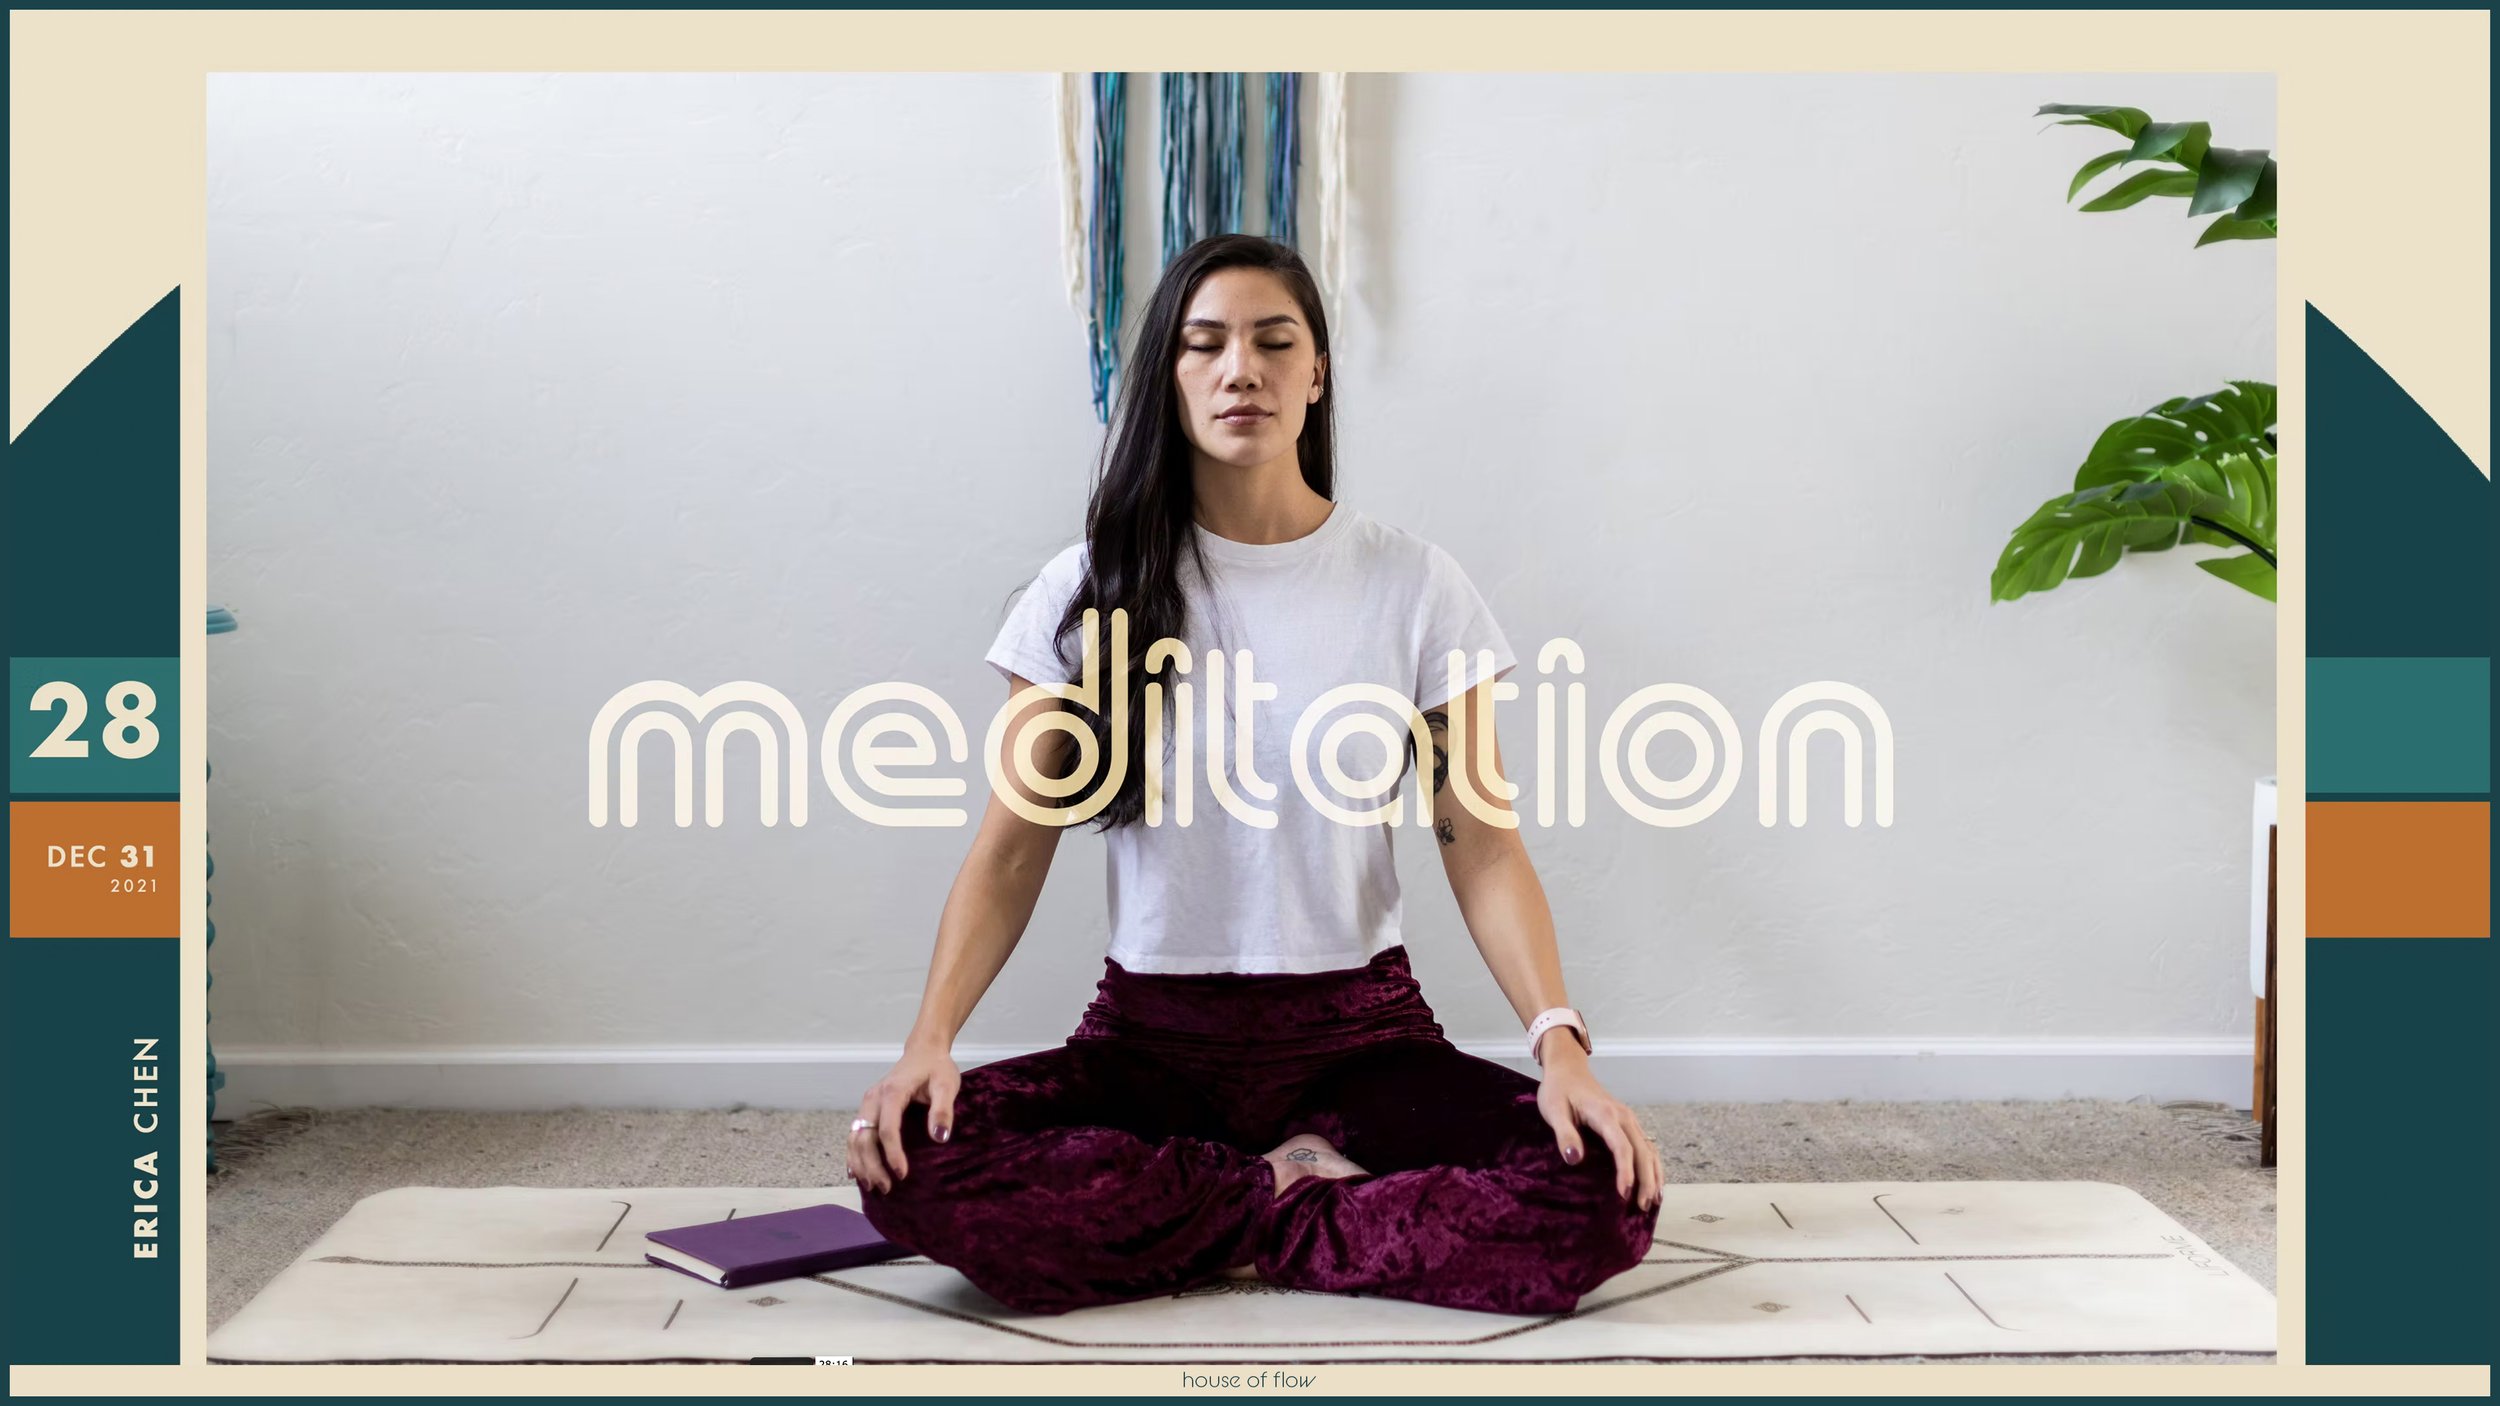 Meditation | NYE Intention Setting | 28 minutes